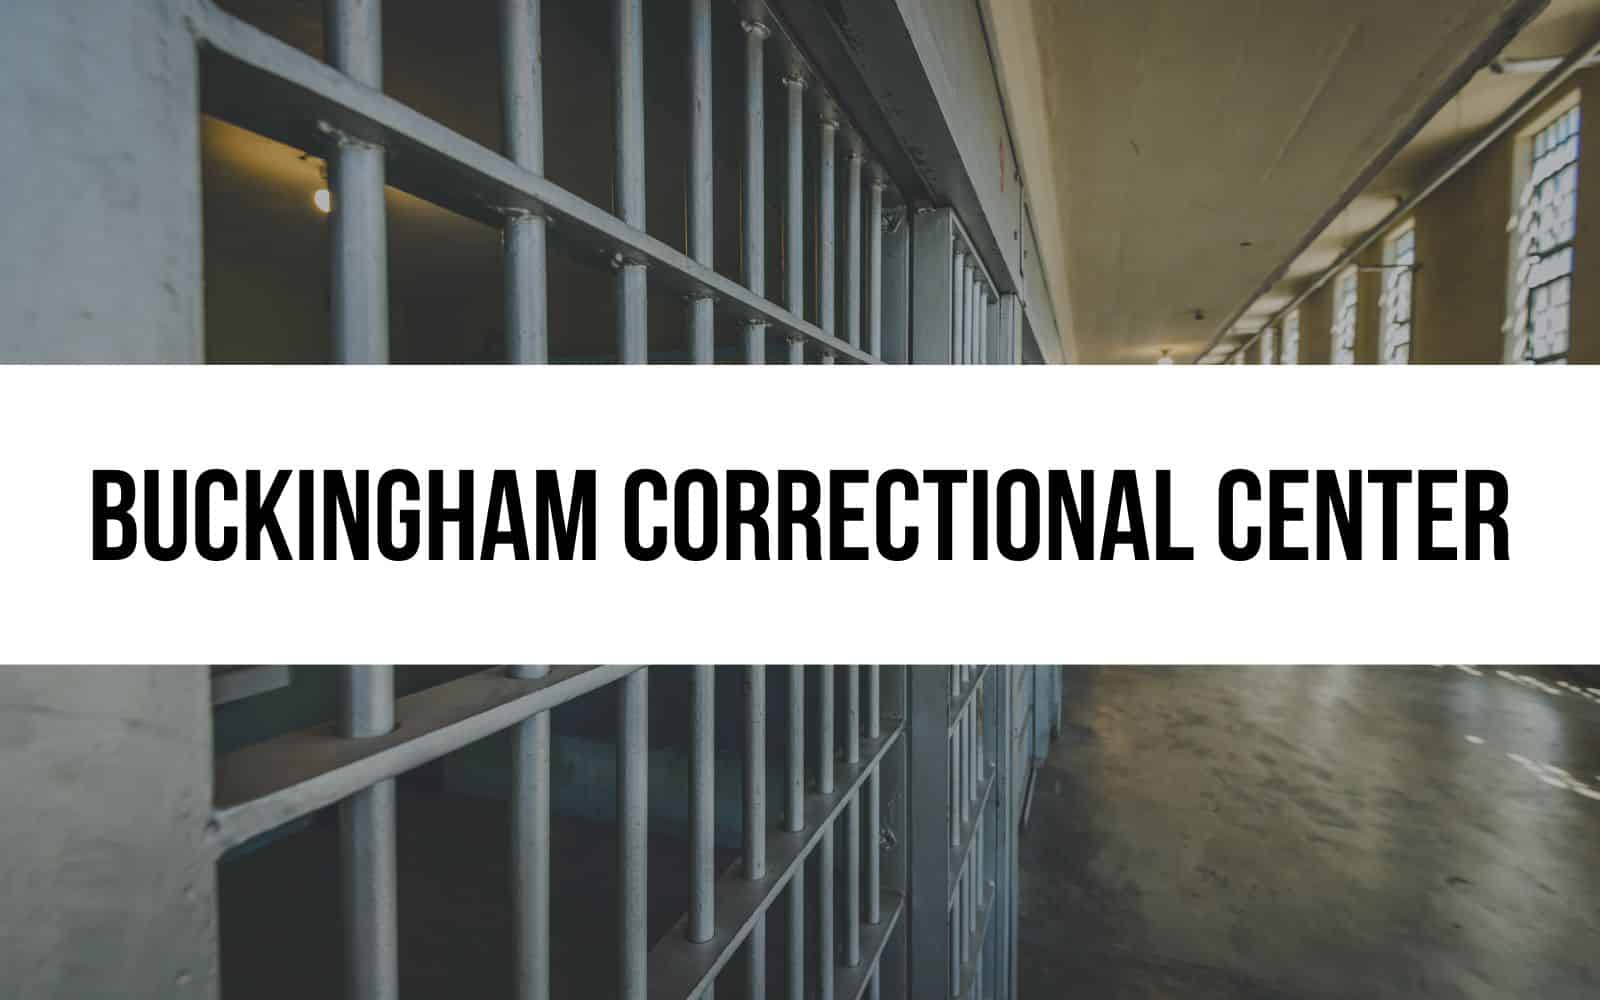 Buckingham Correctional Center